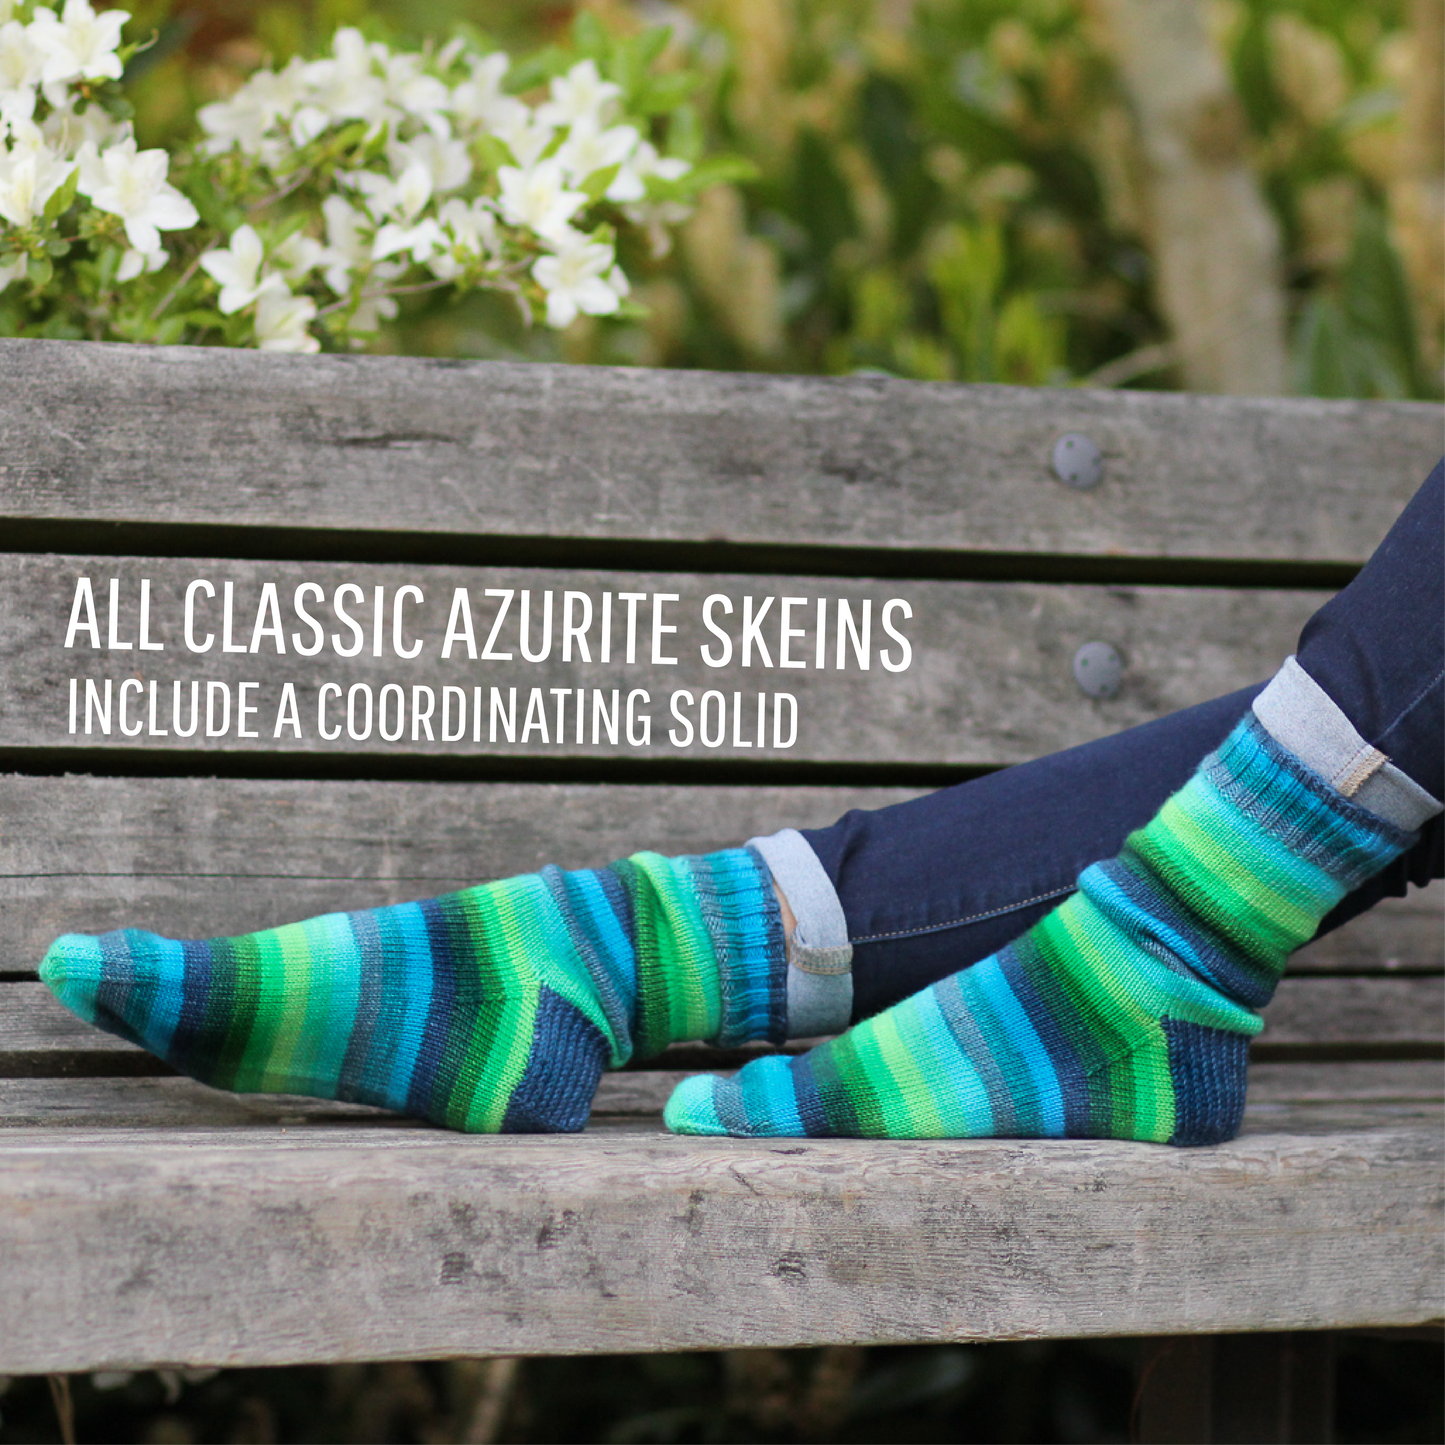 Azurite self-striping green and blue sock knitting yarn from Gauge Dye Works